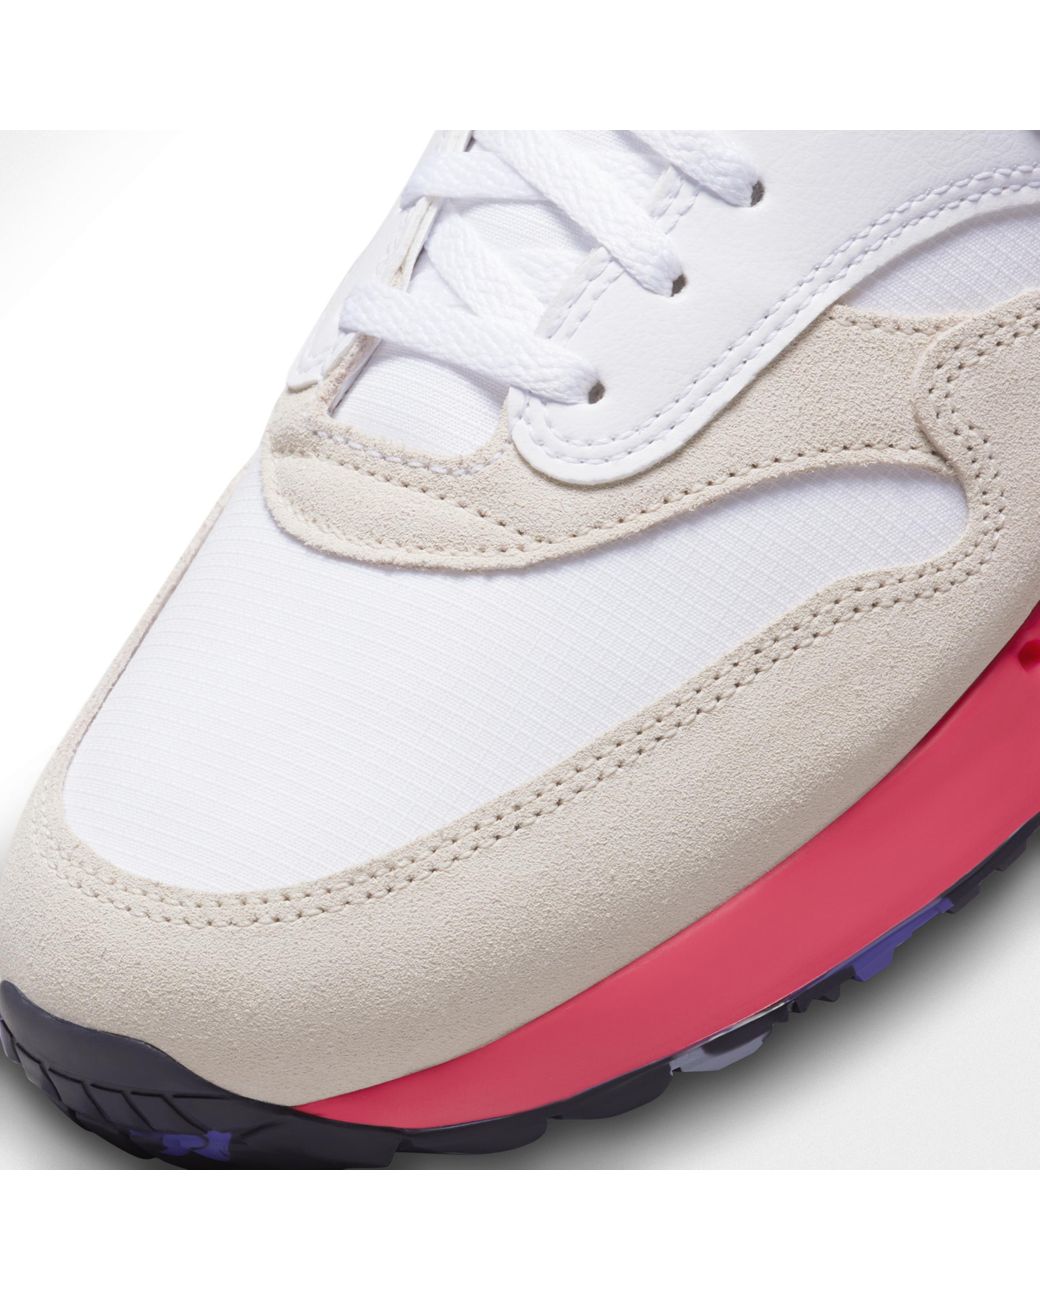 Nike Air Max '86 Og G Nrg Golf Shoes in Pink for Men Lyst